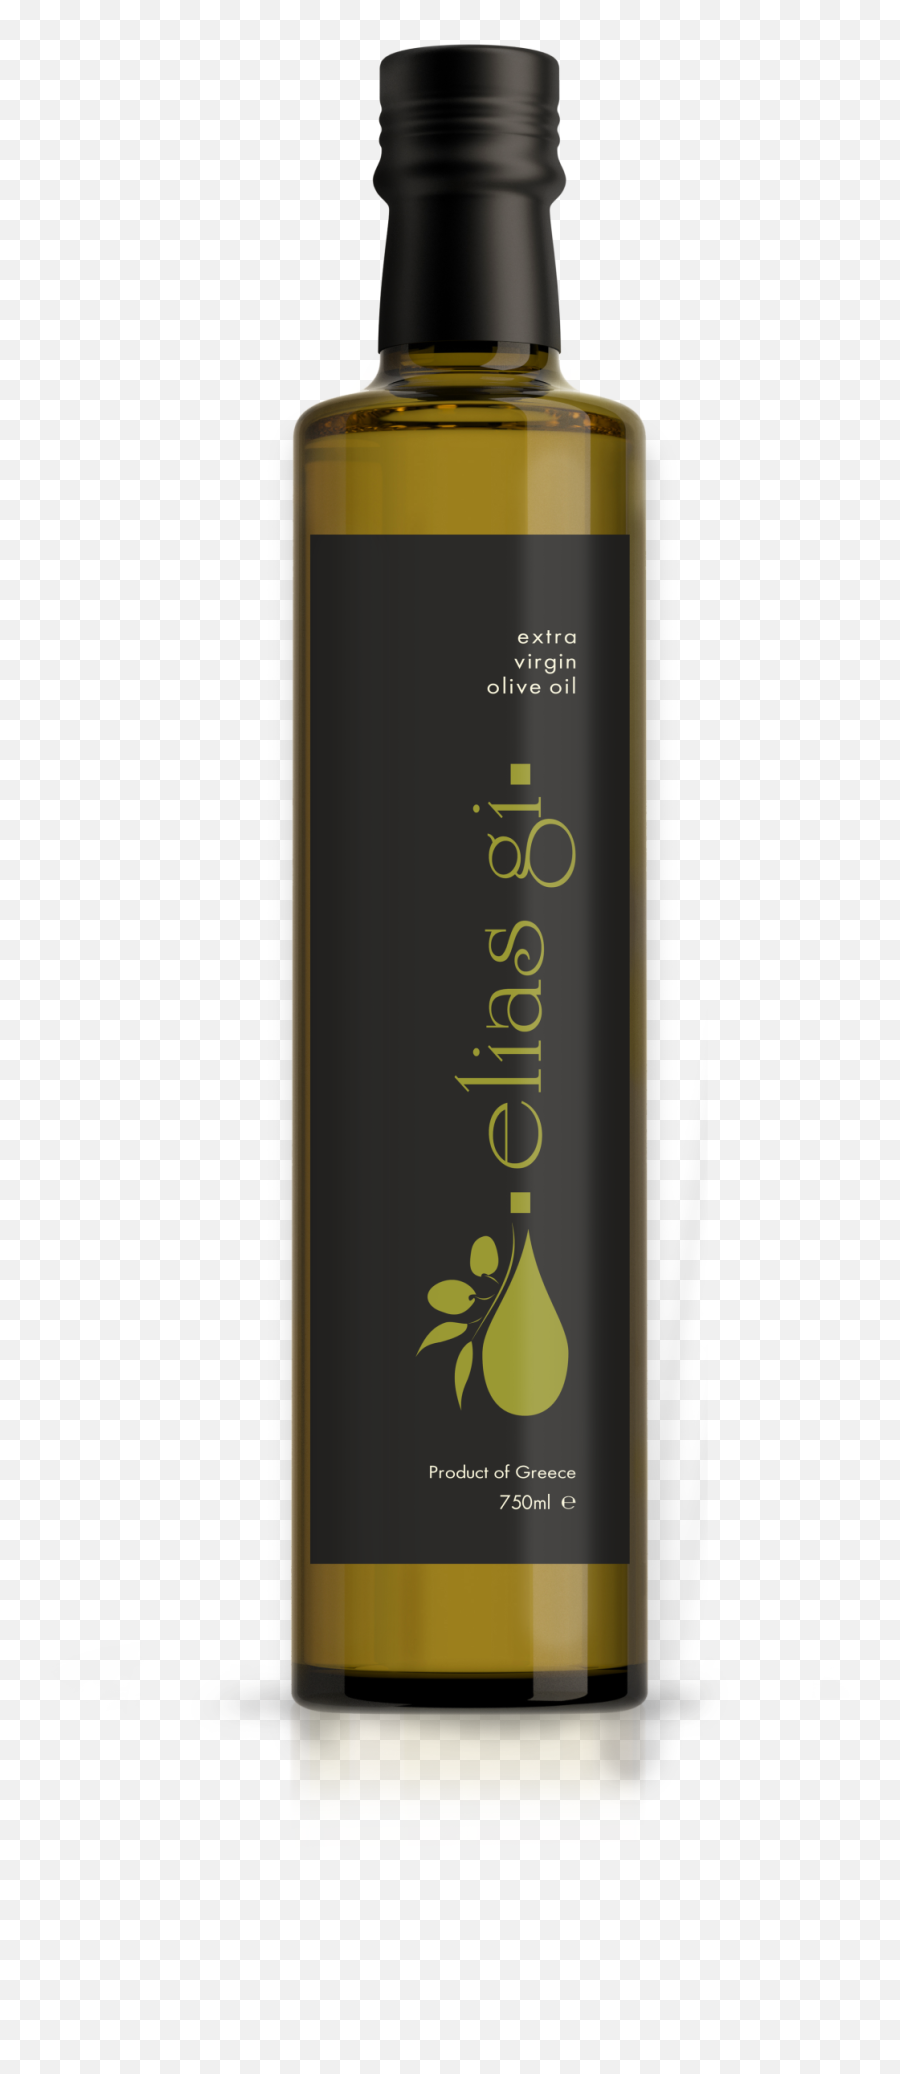 Extra Premium Olive Oil Elias Gi 750ml - Domaine De Canton Png,Olive Oil Png